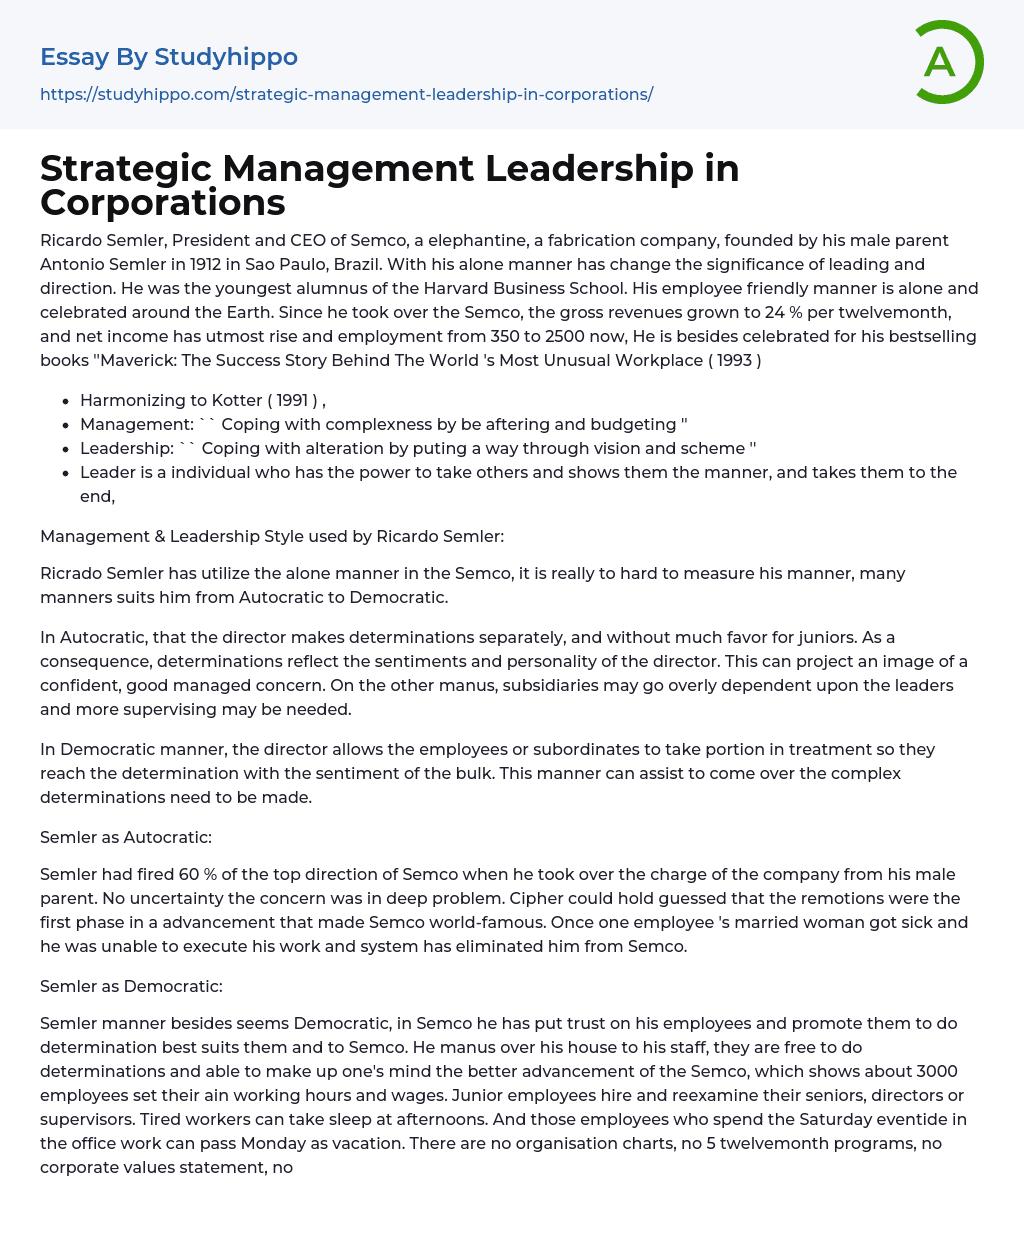 Strategic Management Leadership in Corporations Essay Example